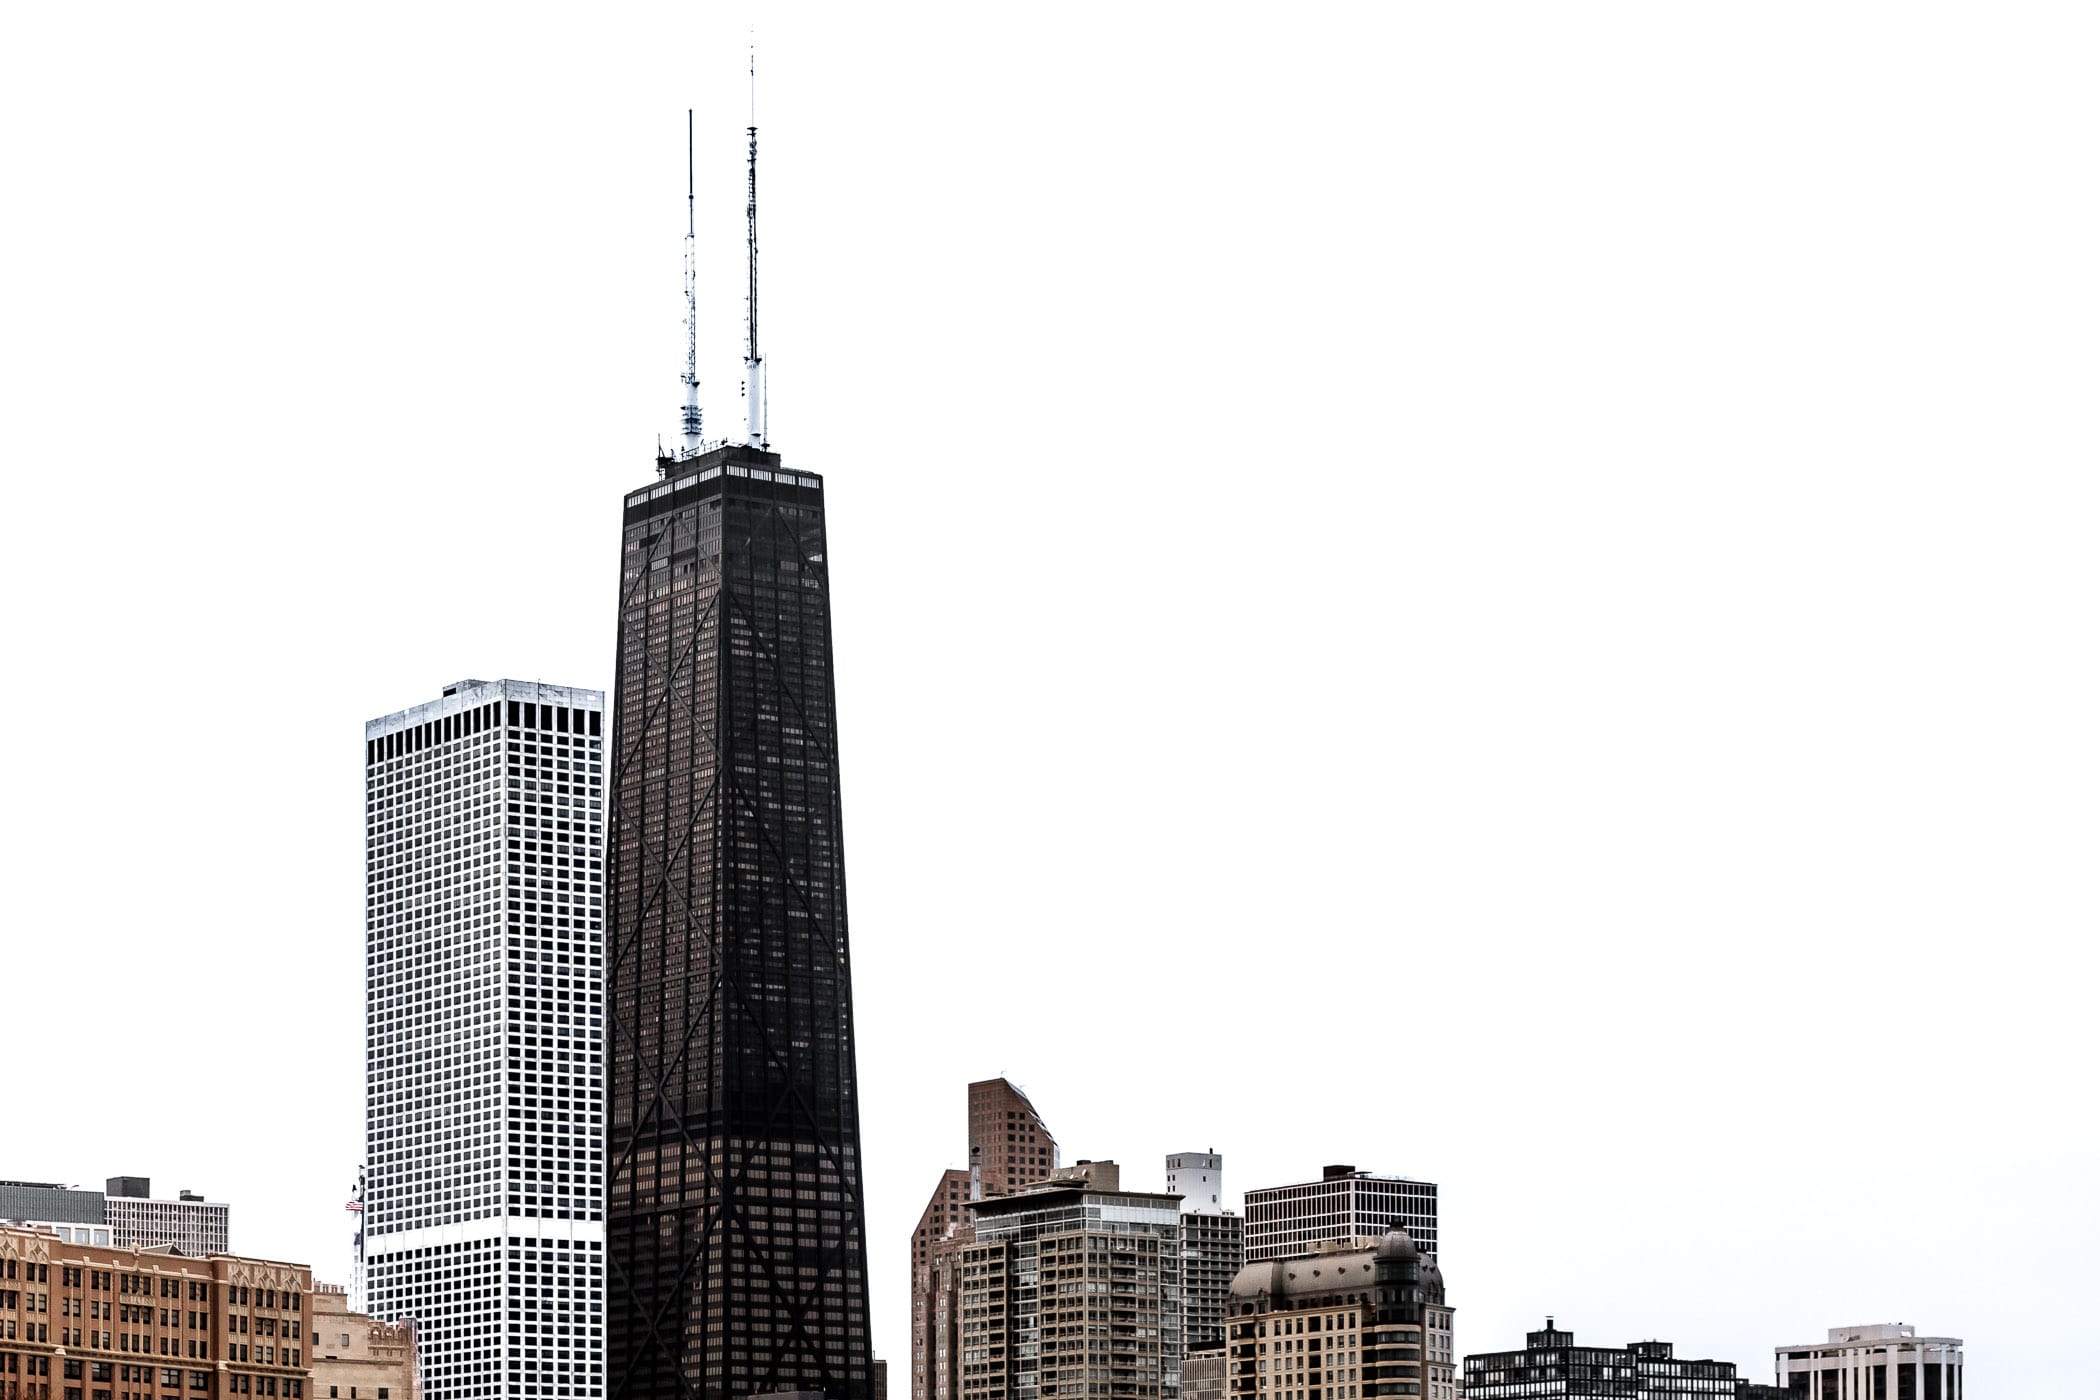 The John Hancock Center—also known as 875 North Michigan Avenue—rises into the sky over Chicago.